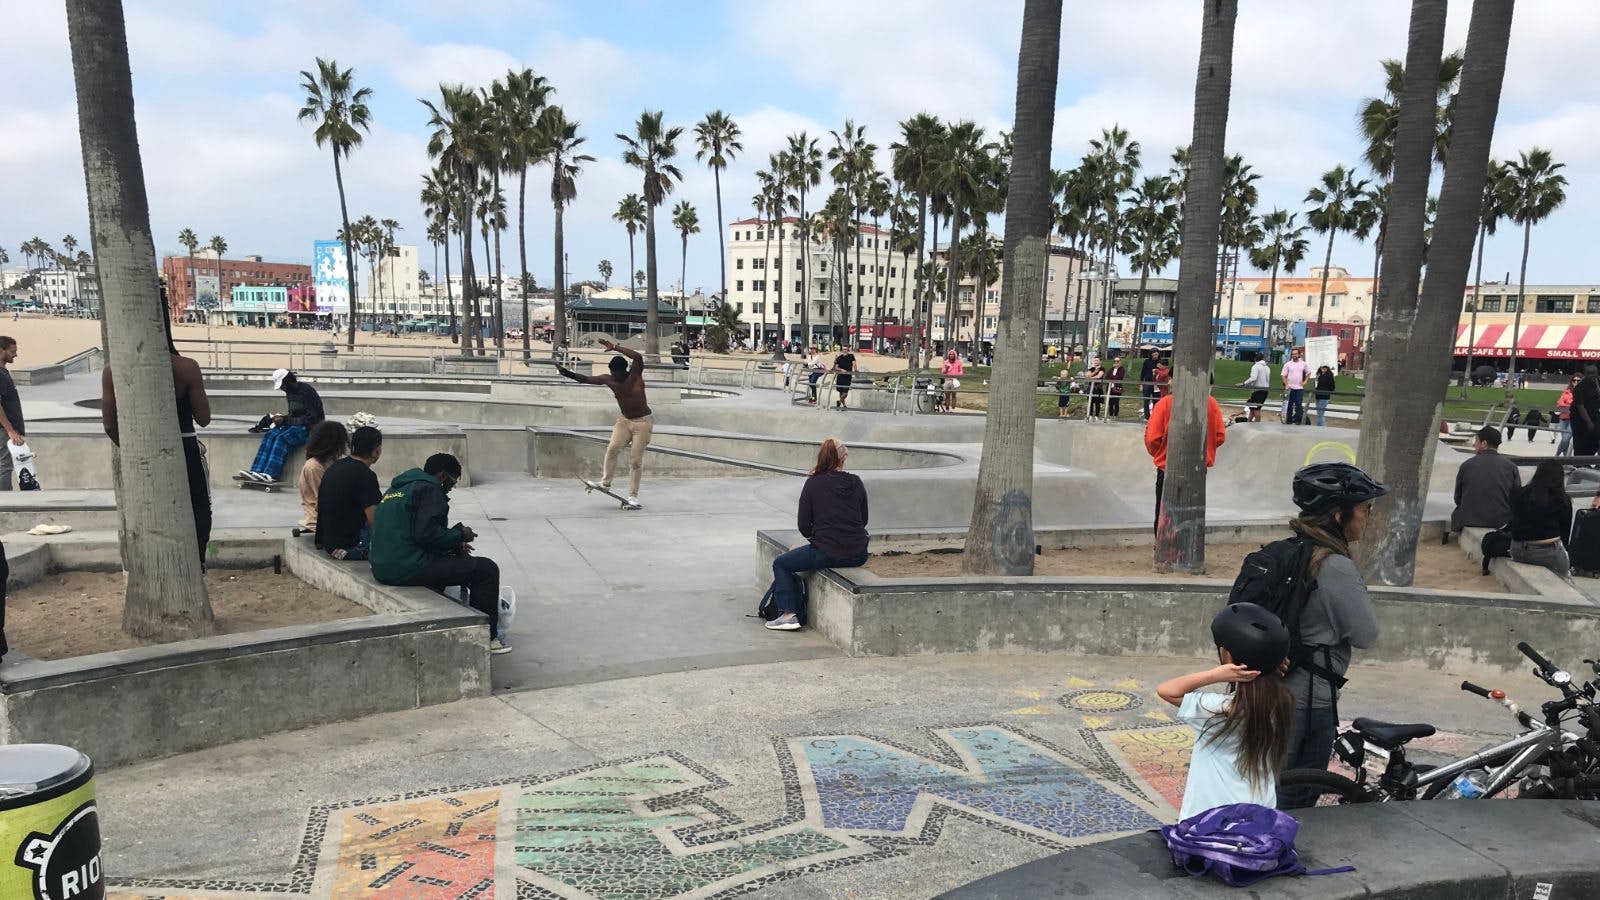 Los Angeles: Venice Boardwalk image